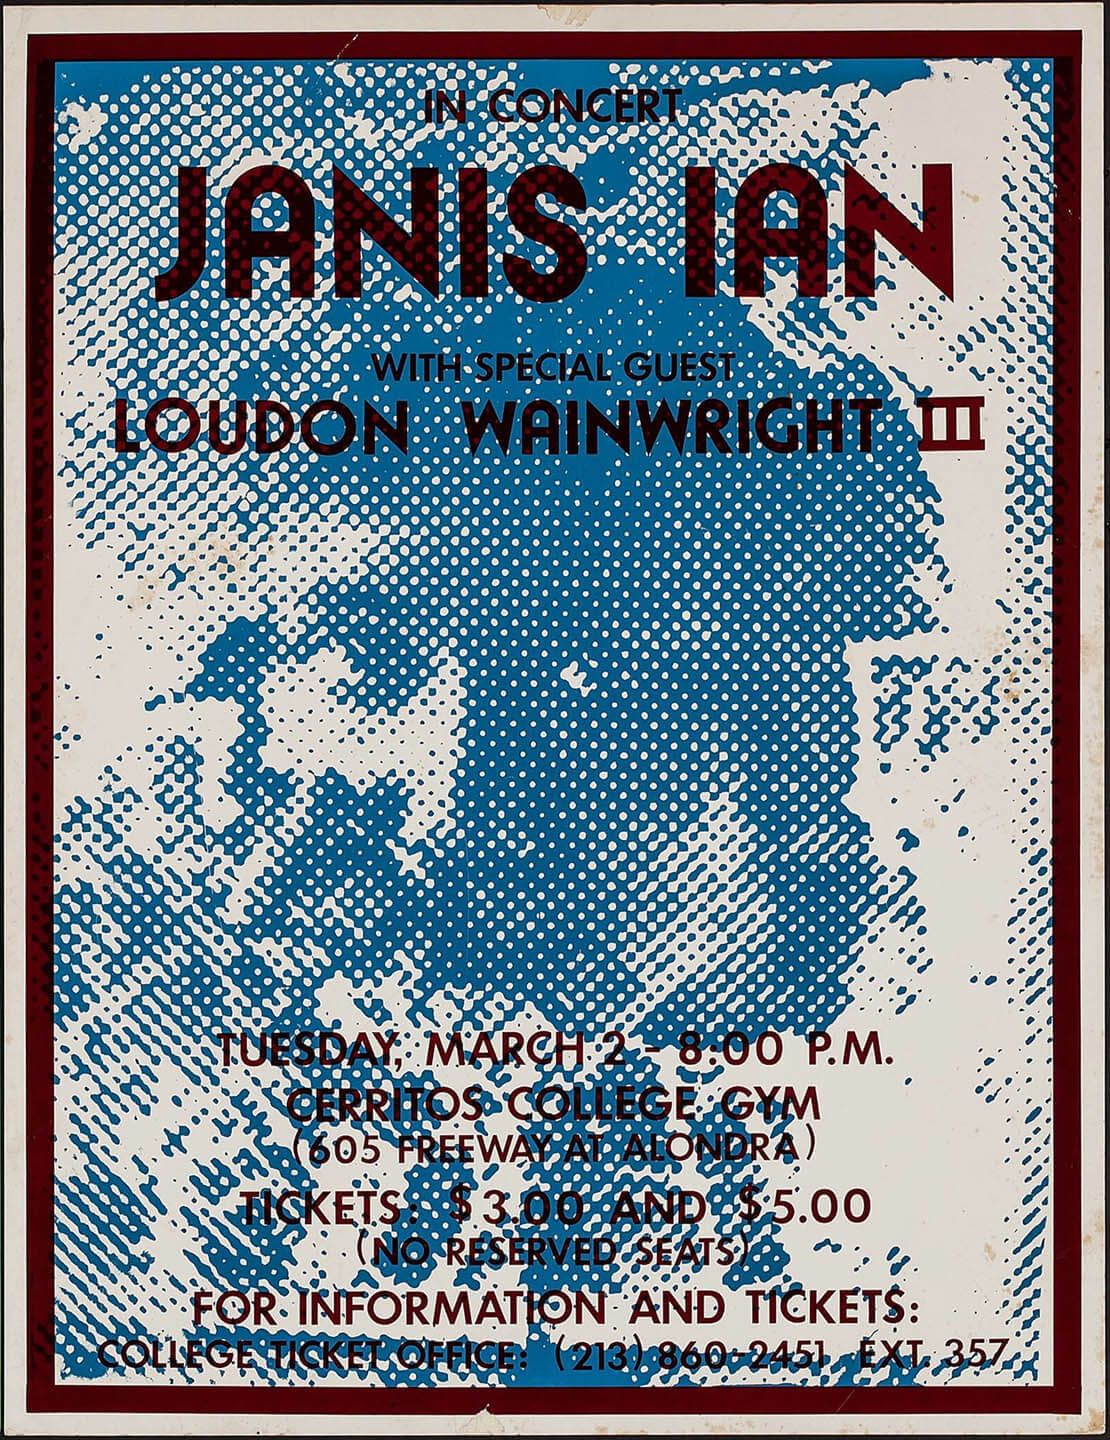 Janis Ian Concert Poster